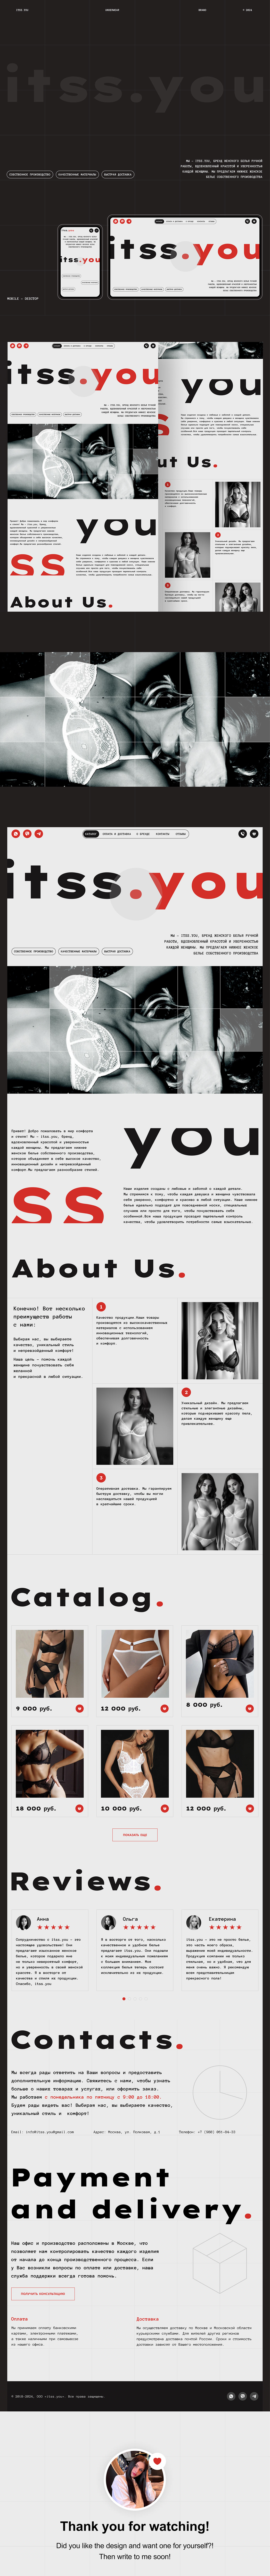 UI/UX design for a women's lingerie store (BEAUTY)